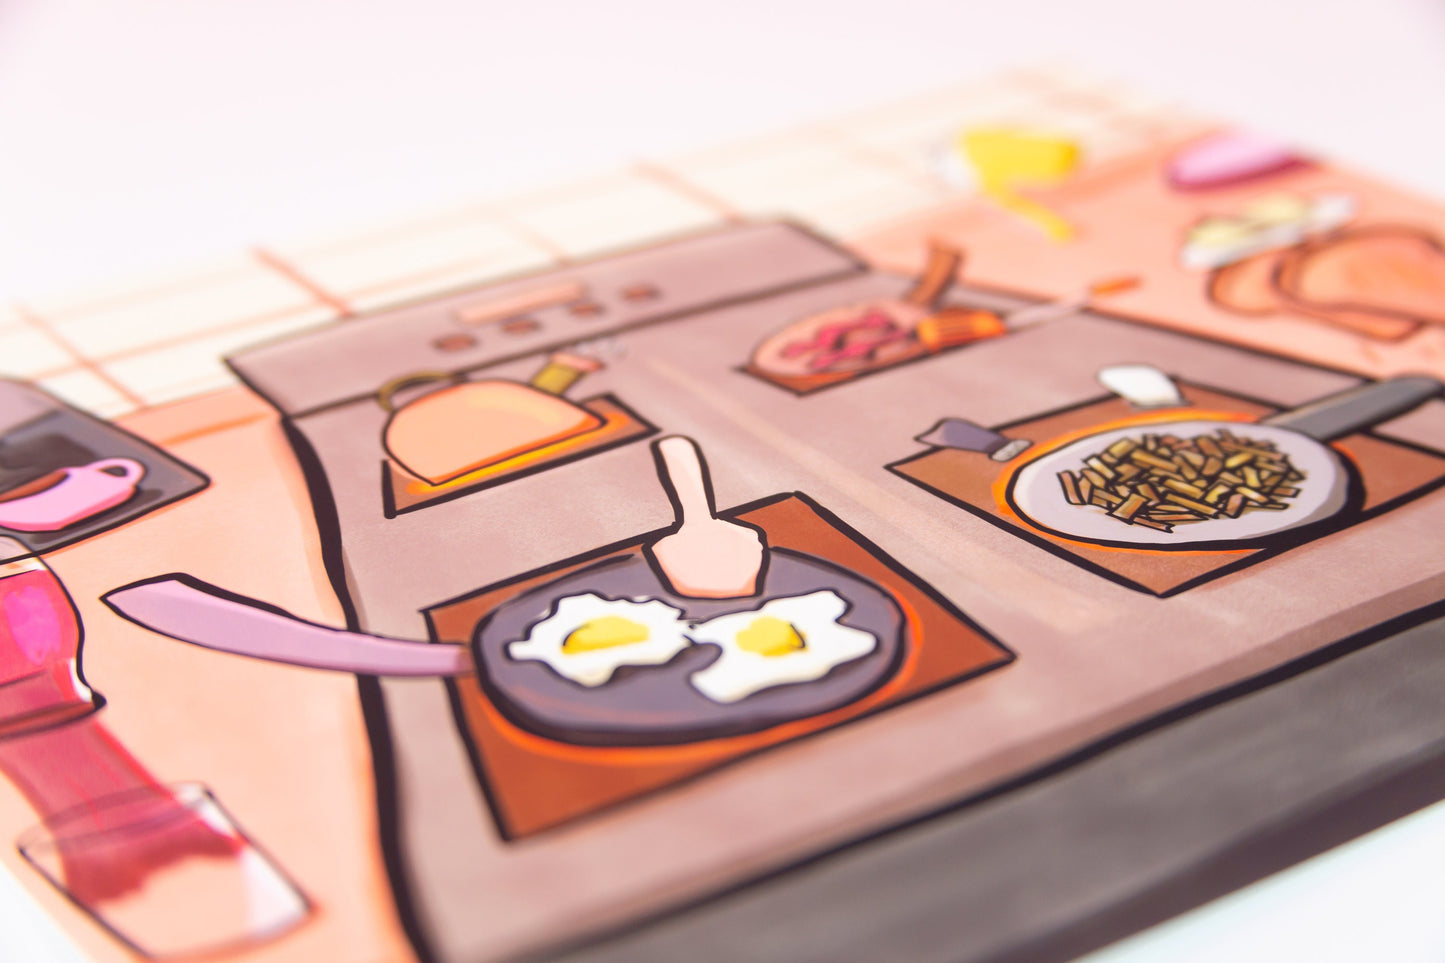 Breakfast Art Print